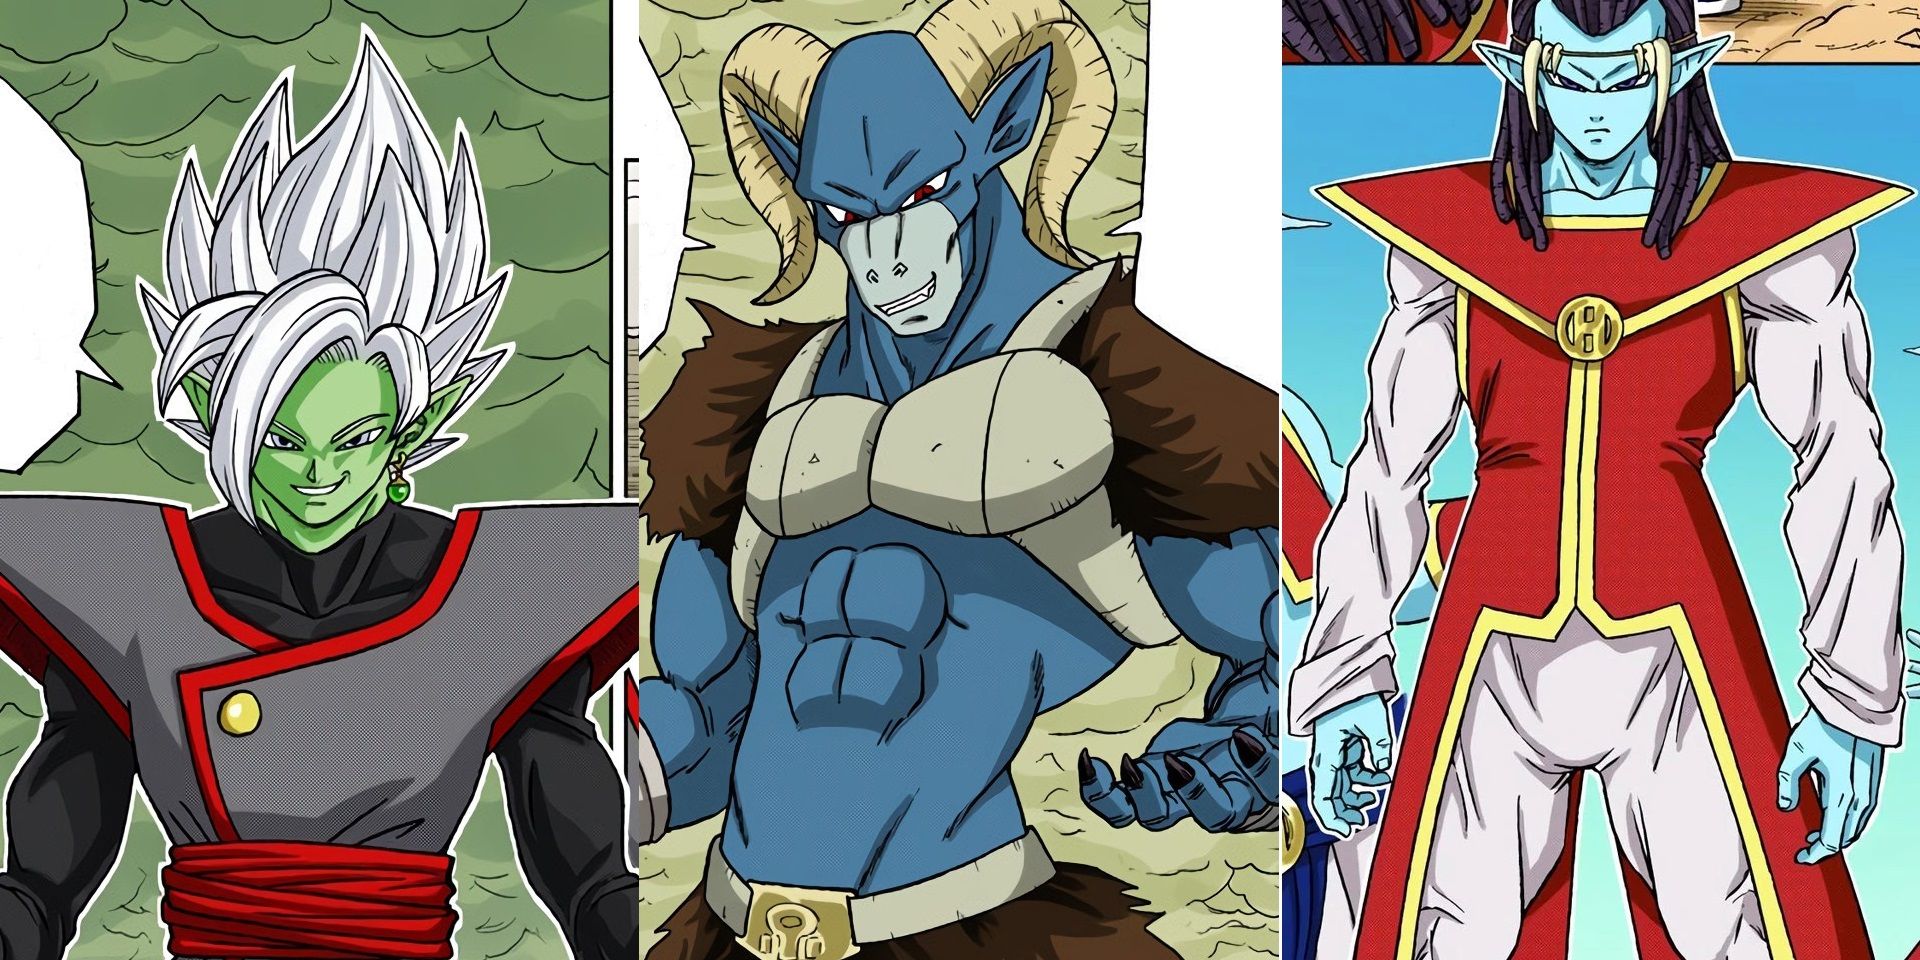 The villains Zamasu, Moro, and Gas in Dragon Ball Super